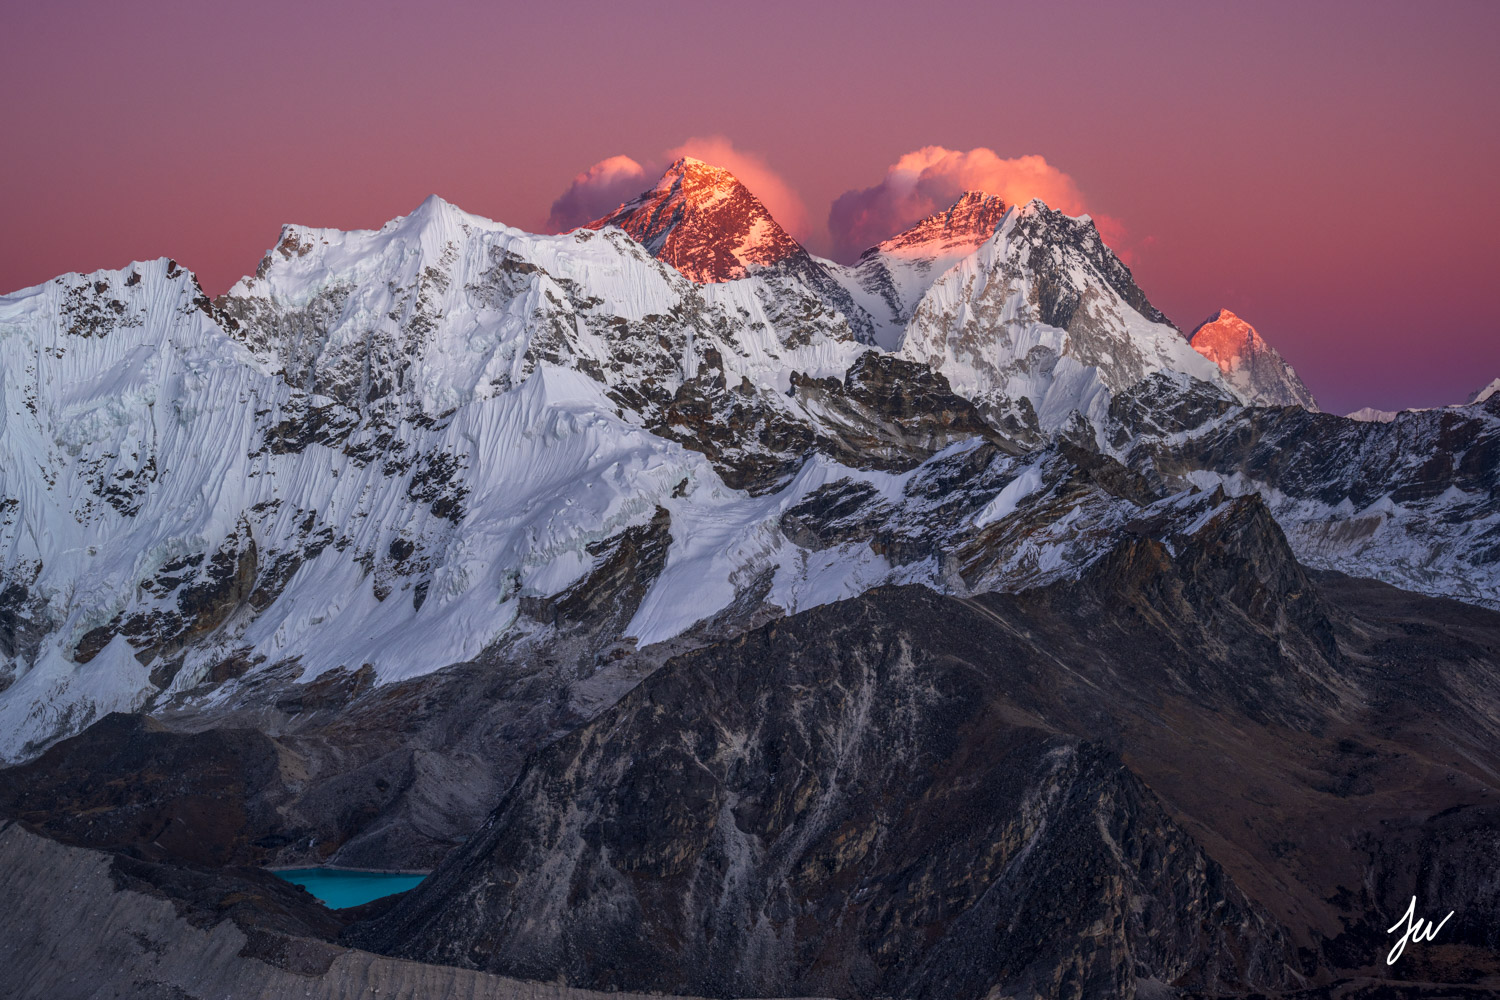 Sunset on Everest in Khumbu Region, Nepal.